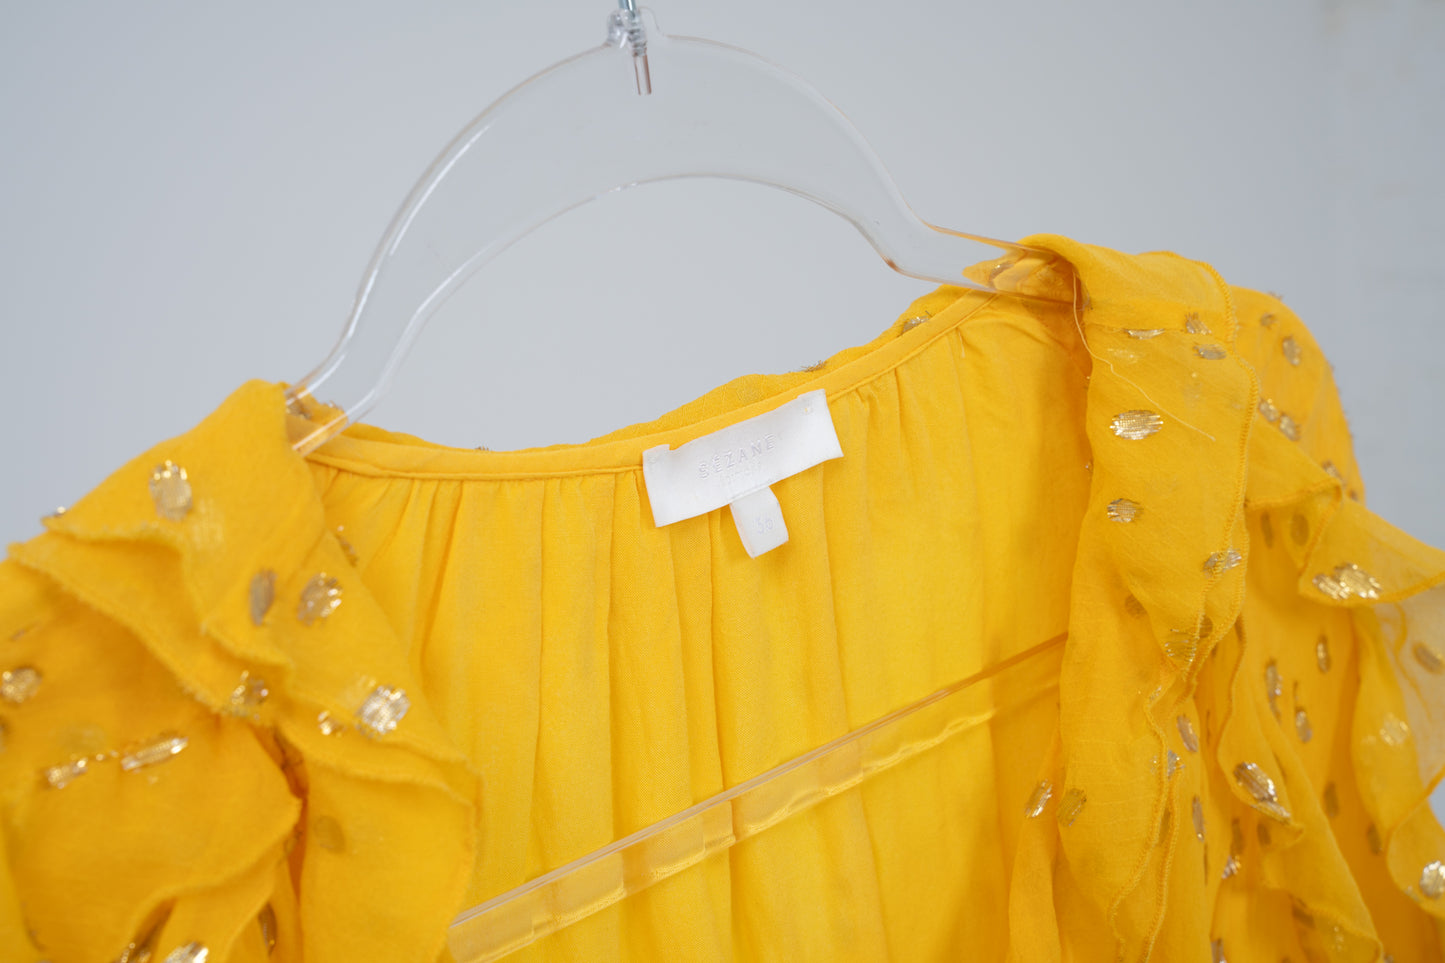 V-neckline dress in yellow Sezane, size S